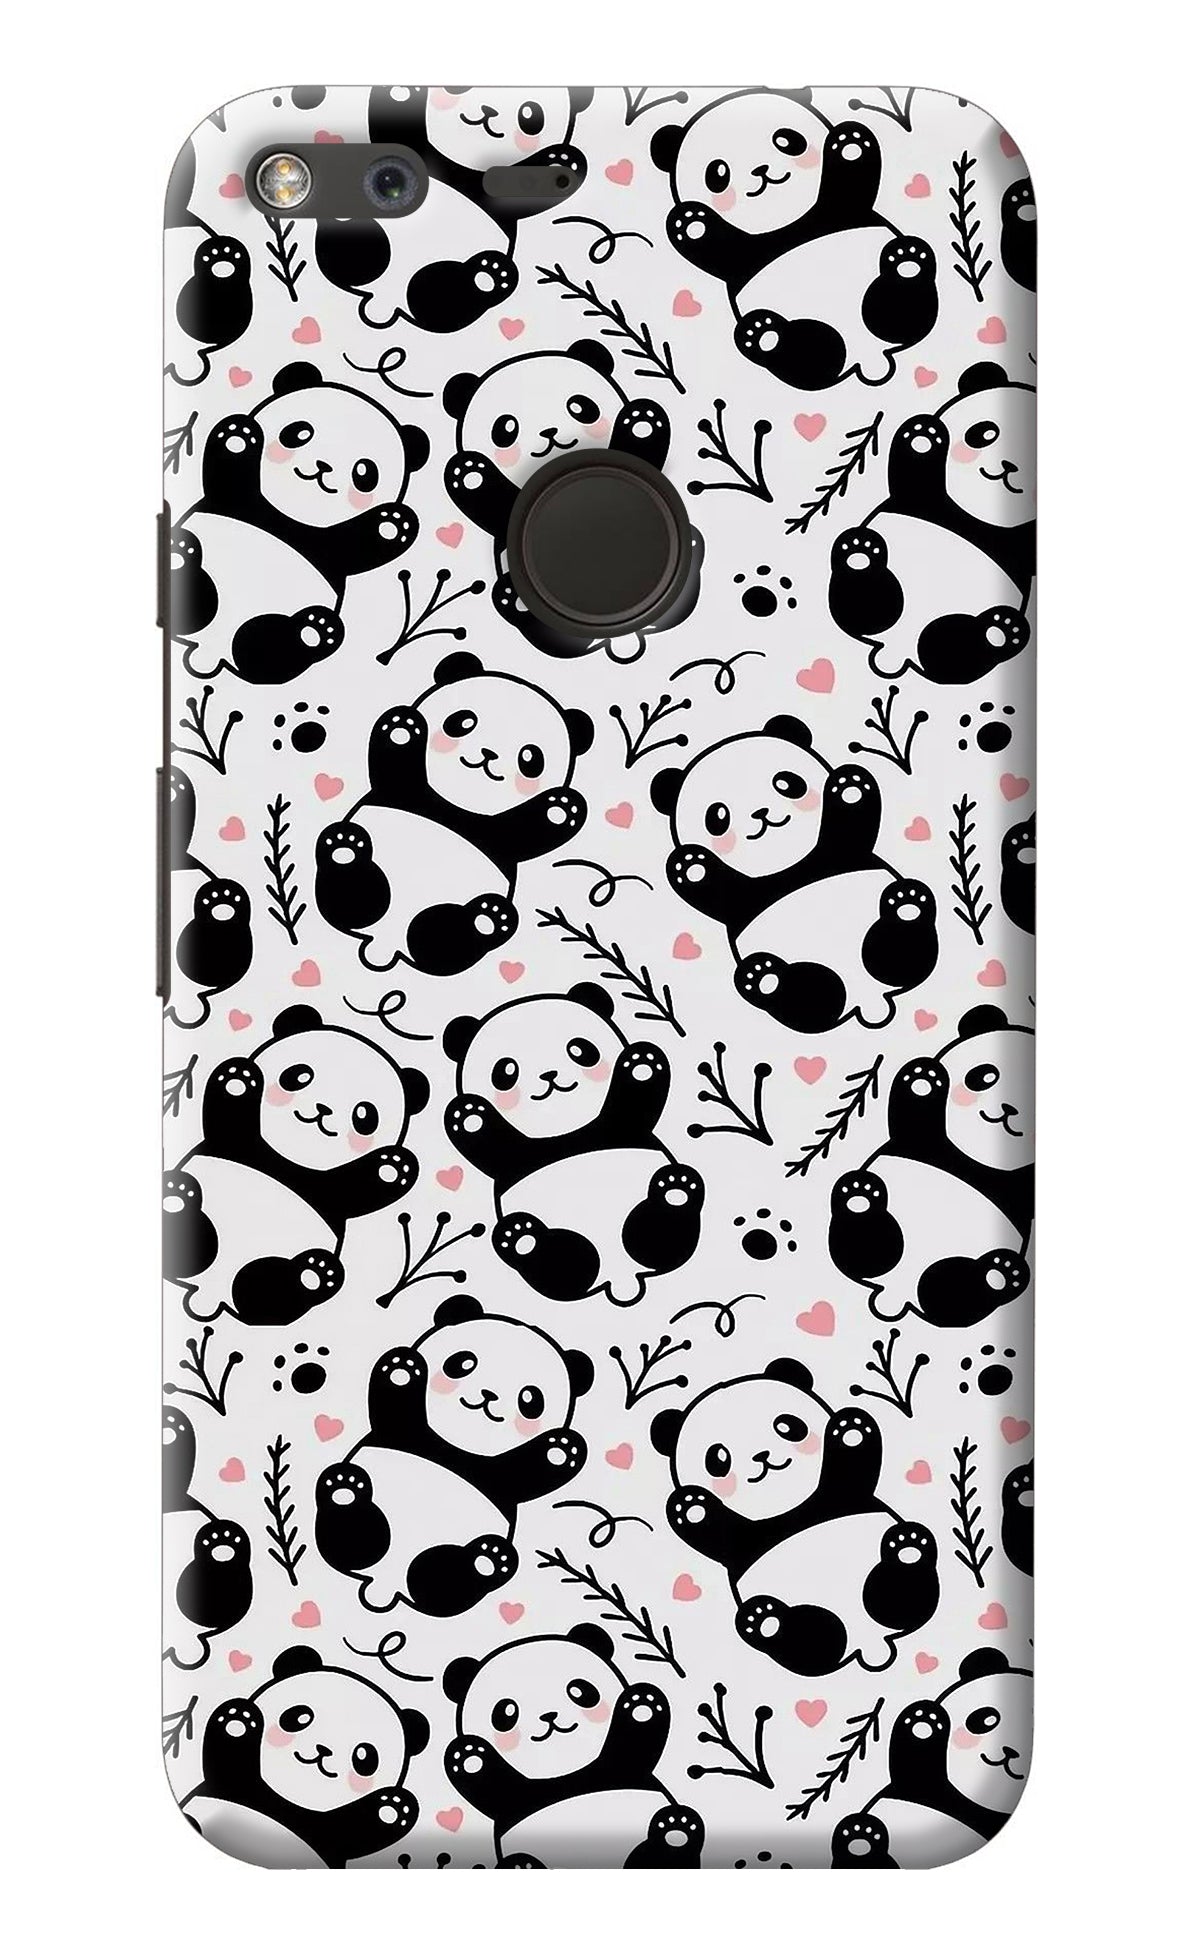 Cute Panda Google Pixel XL Back Cover